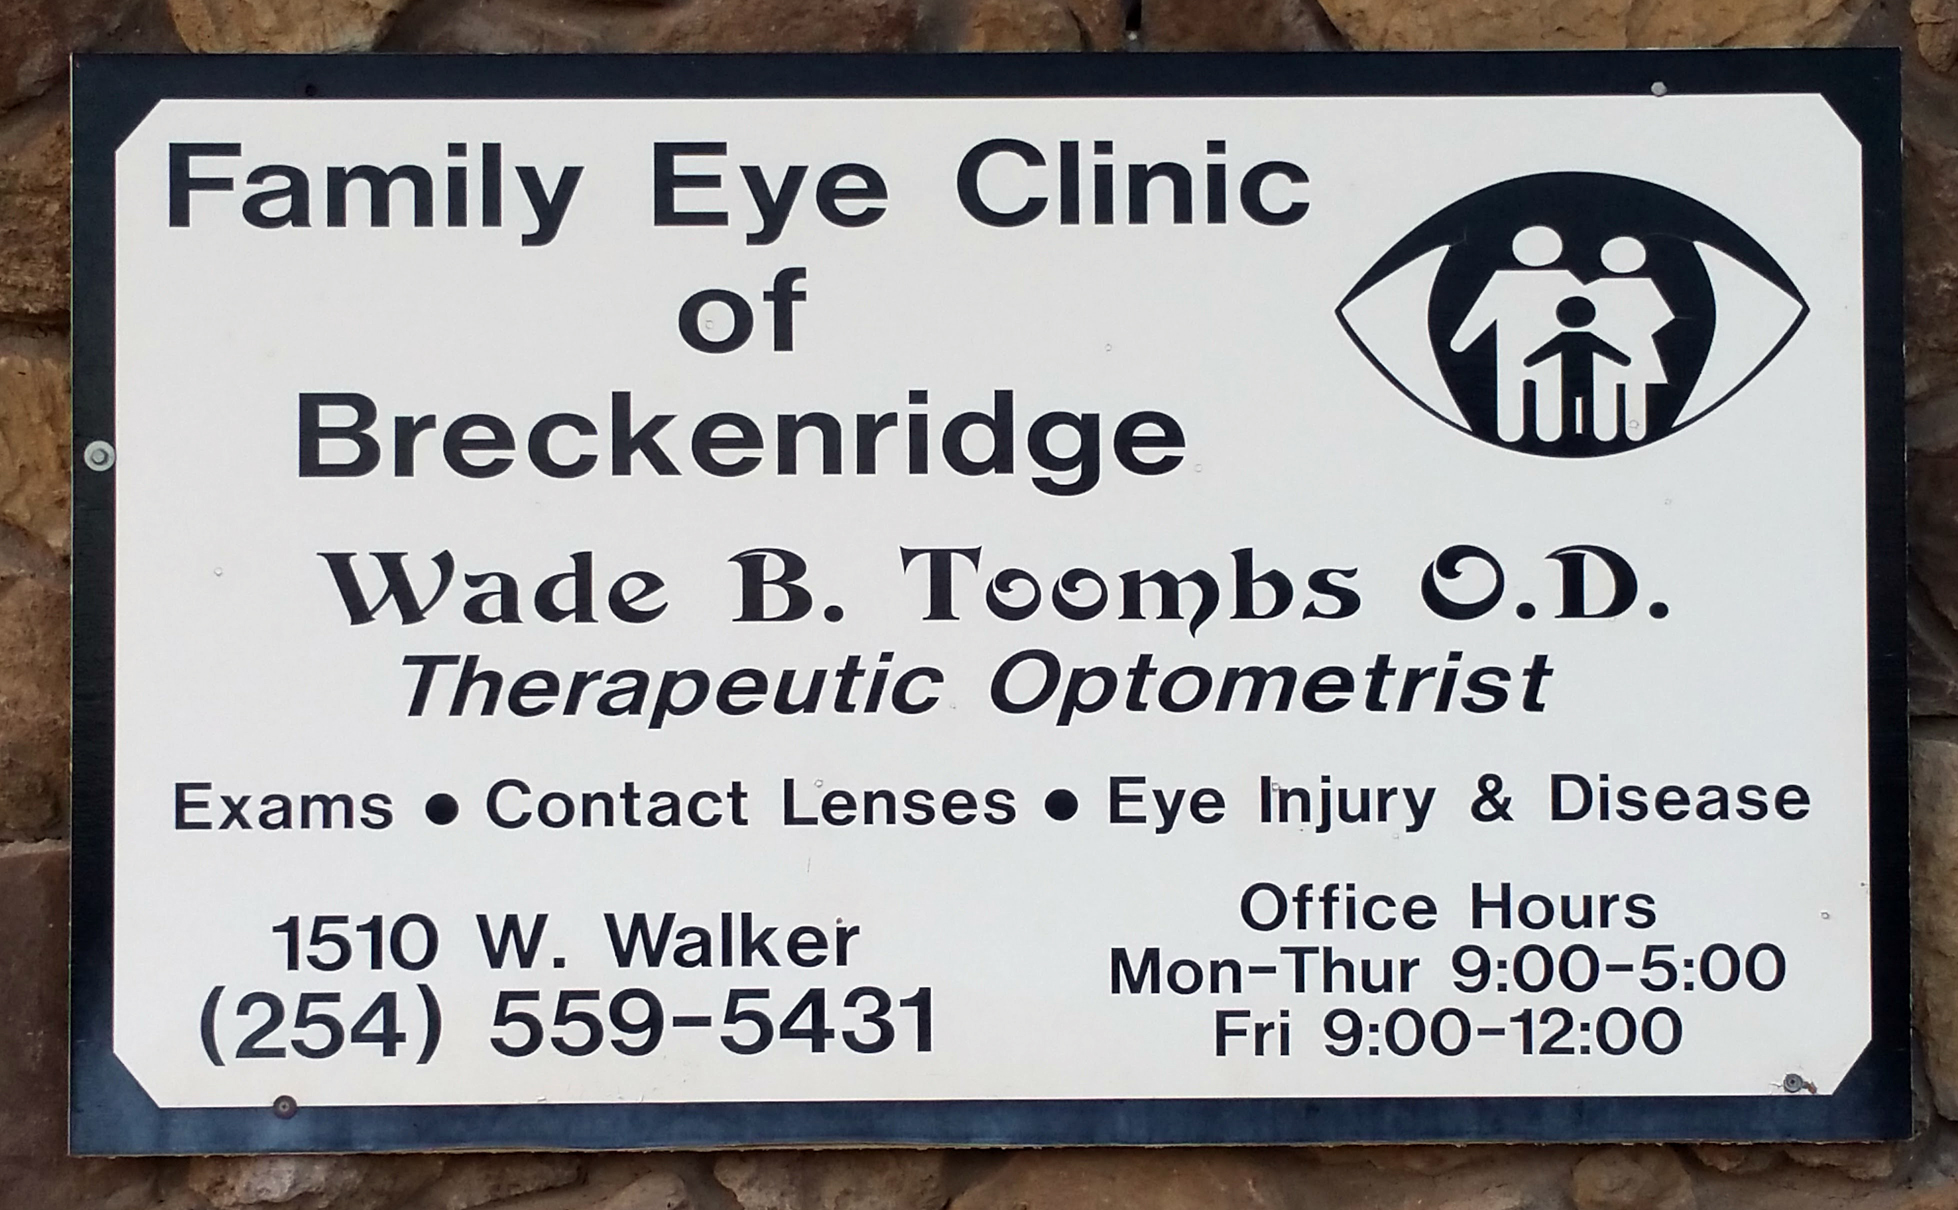 Family Eye Clinic of Breckenridge 1510 W Walker St, Breckenridge Texas 76424